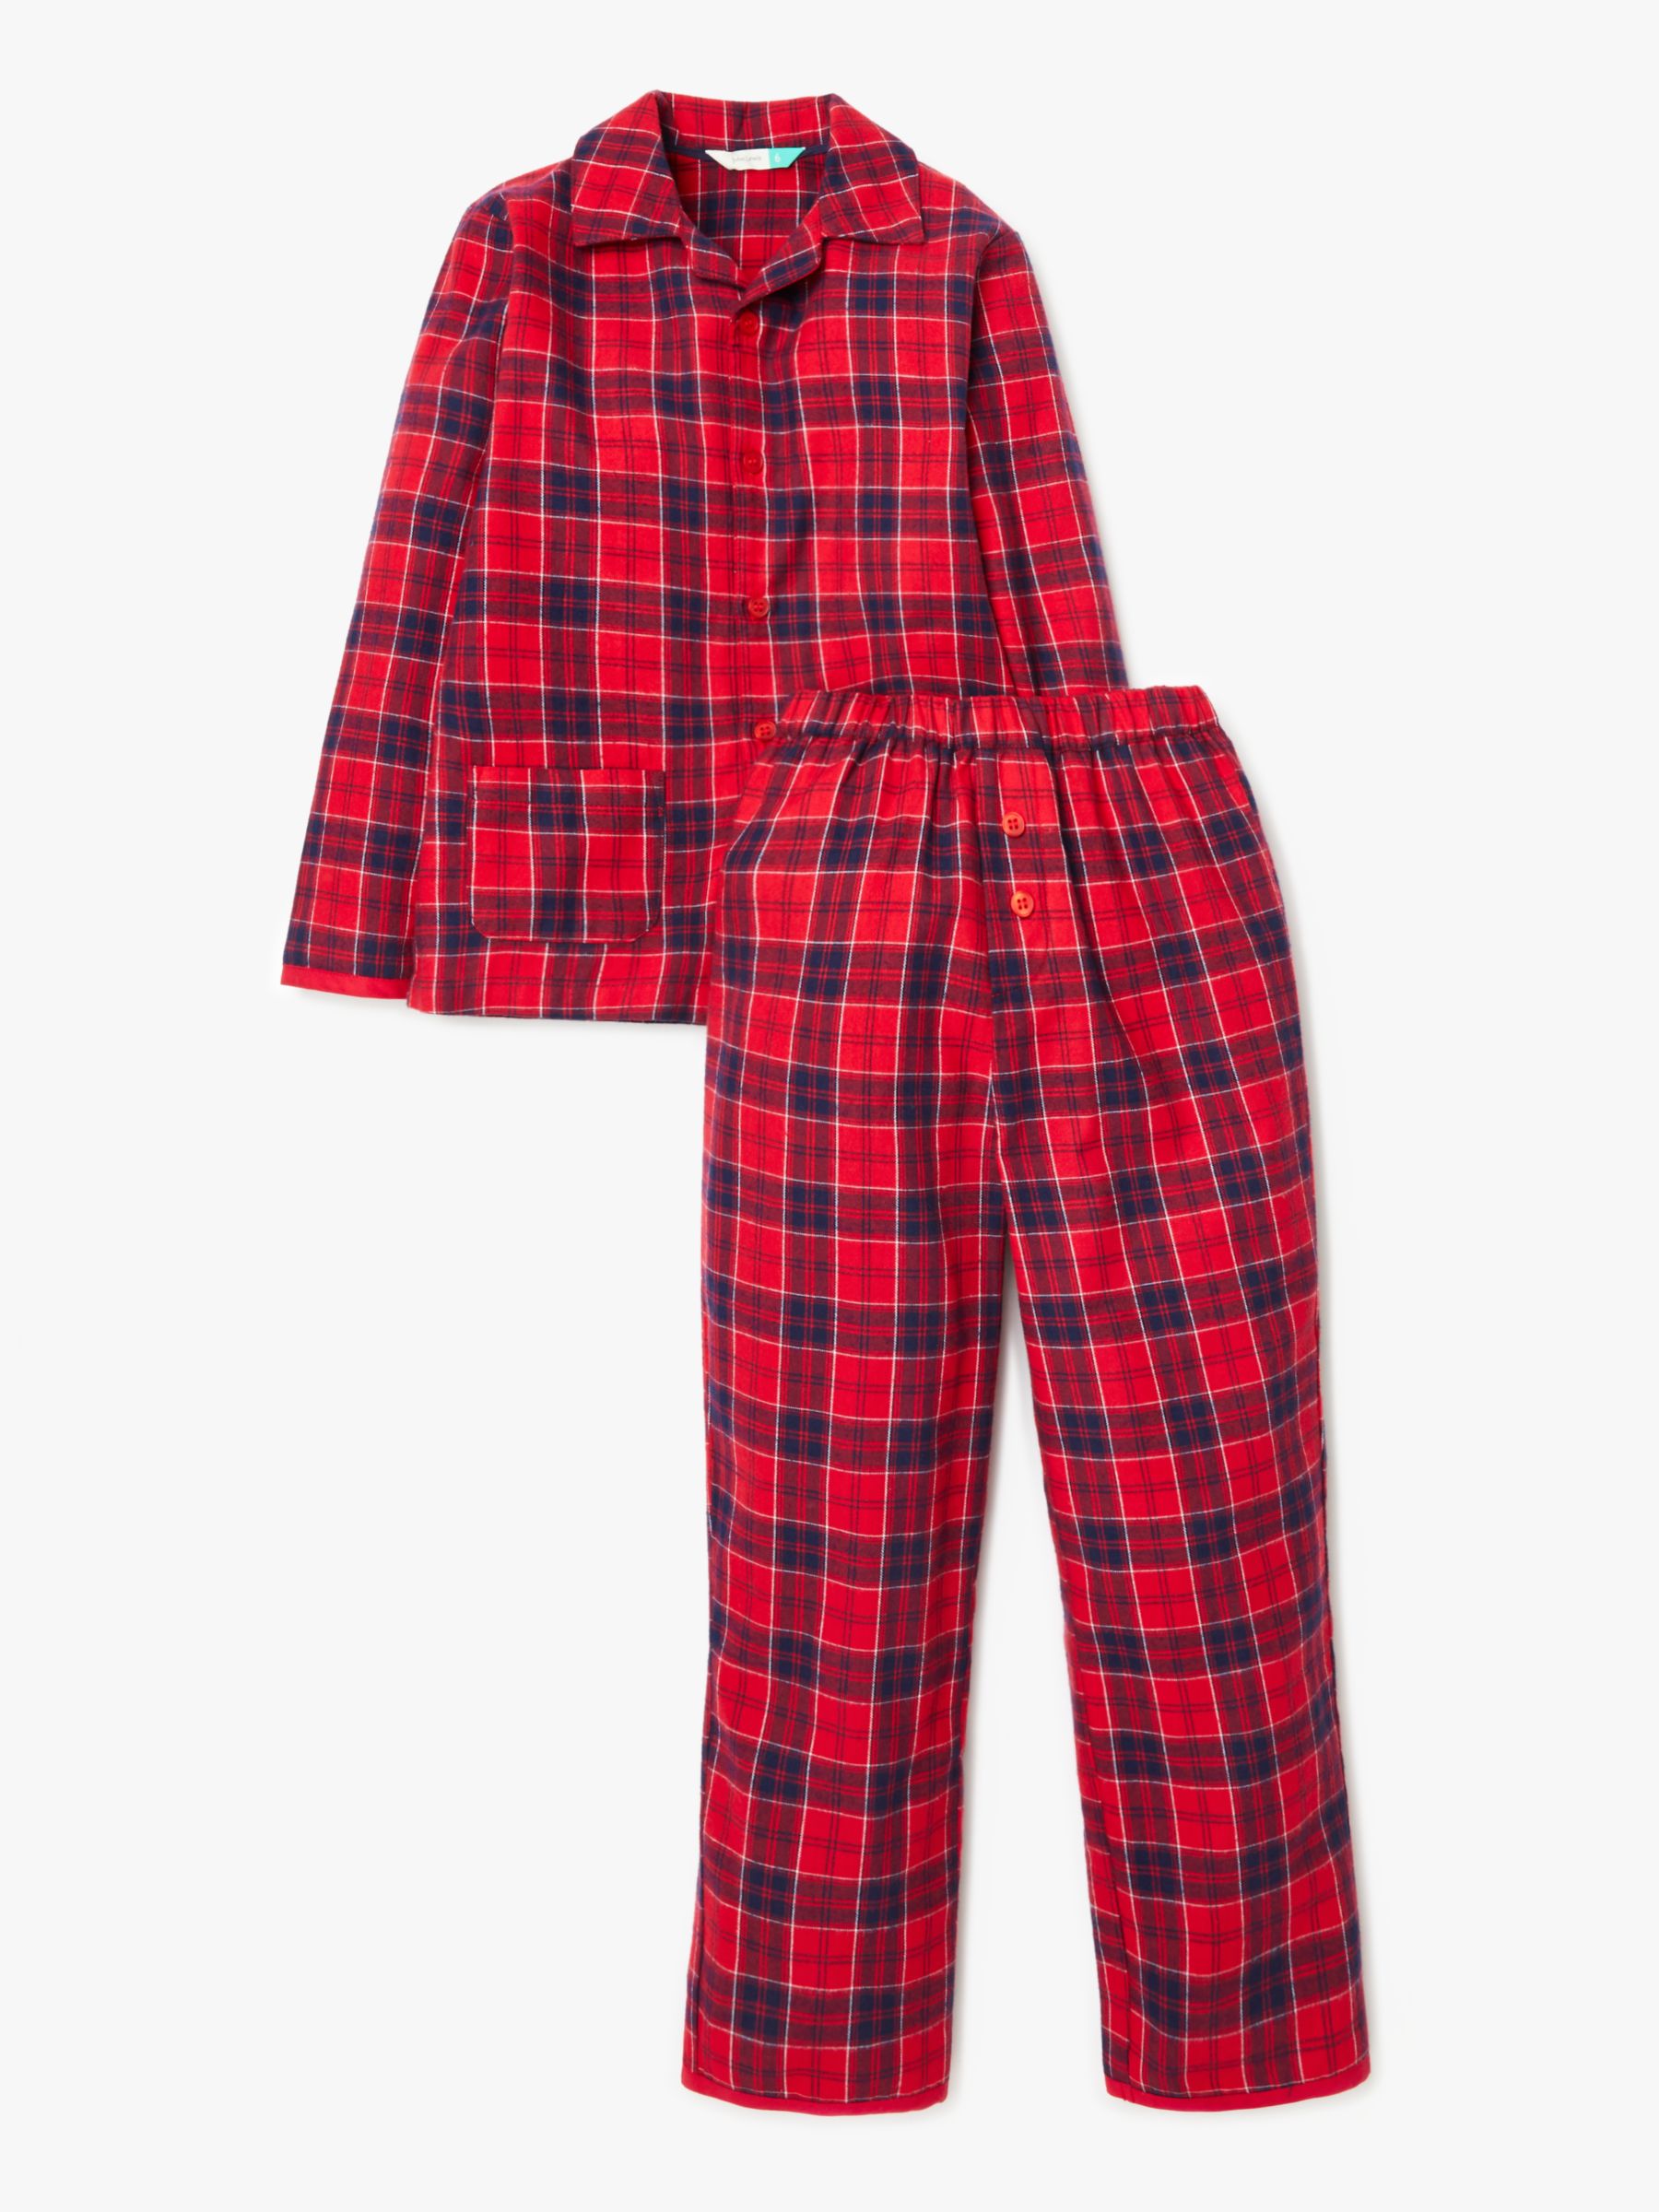 John Lewis & Partners Boys' Woven Check Pyjamas, Red at John Lewis ...